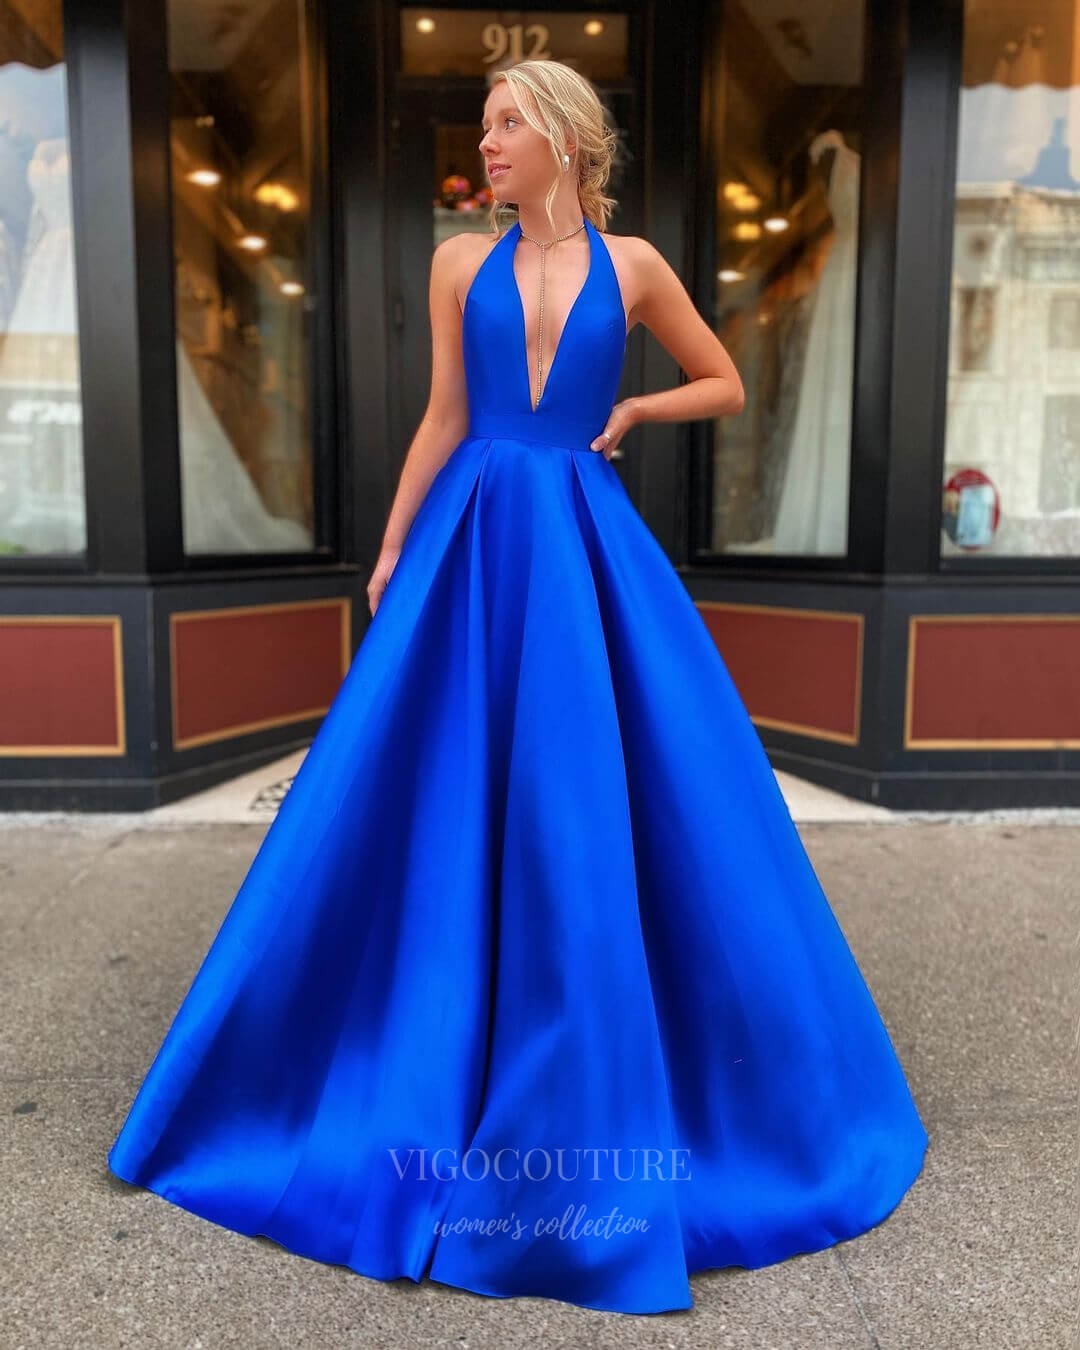 vigocouture-Satin Halter Neck A-Line Prom Dress 20837-Prom Dresses-vigocouture-Blue-US2-